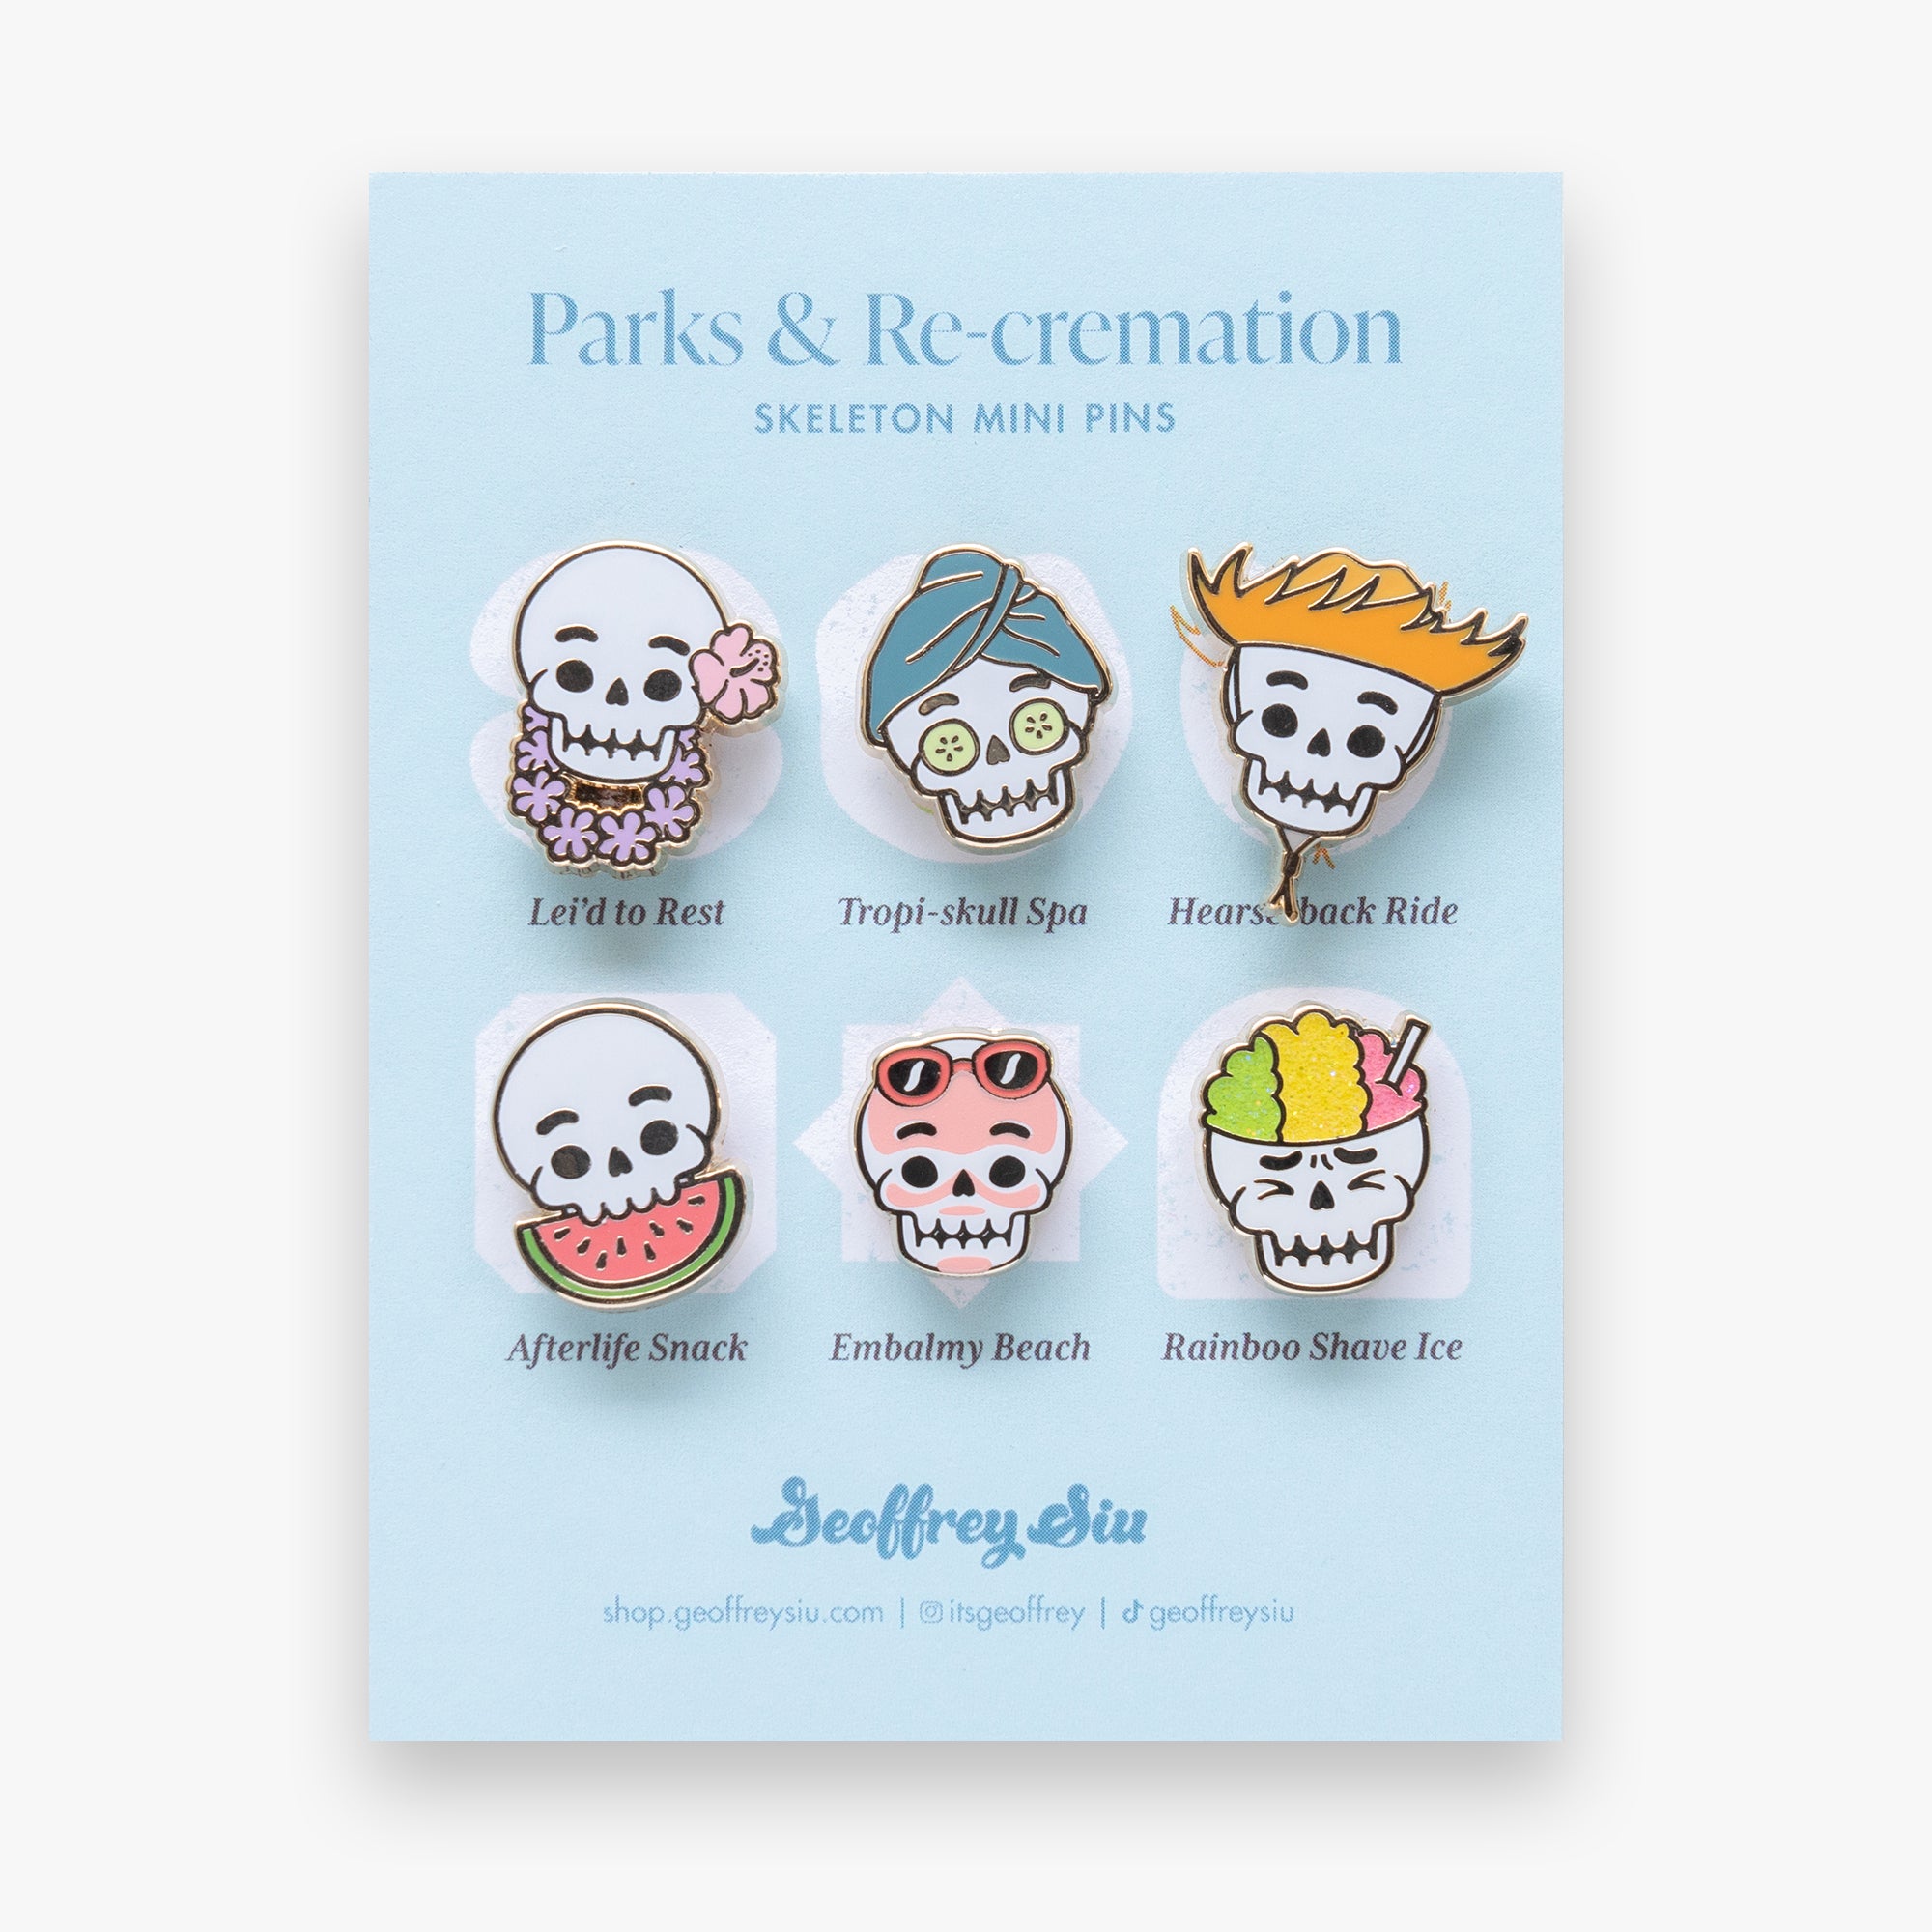 Parks & Re-cremation Skeleton Mini Pins